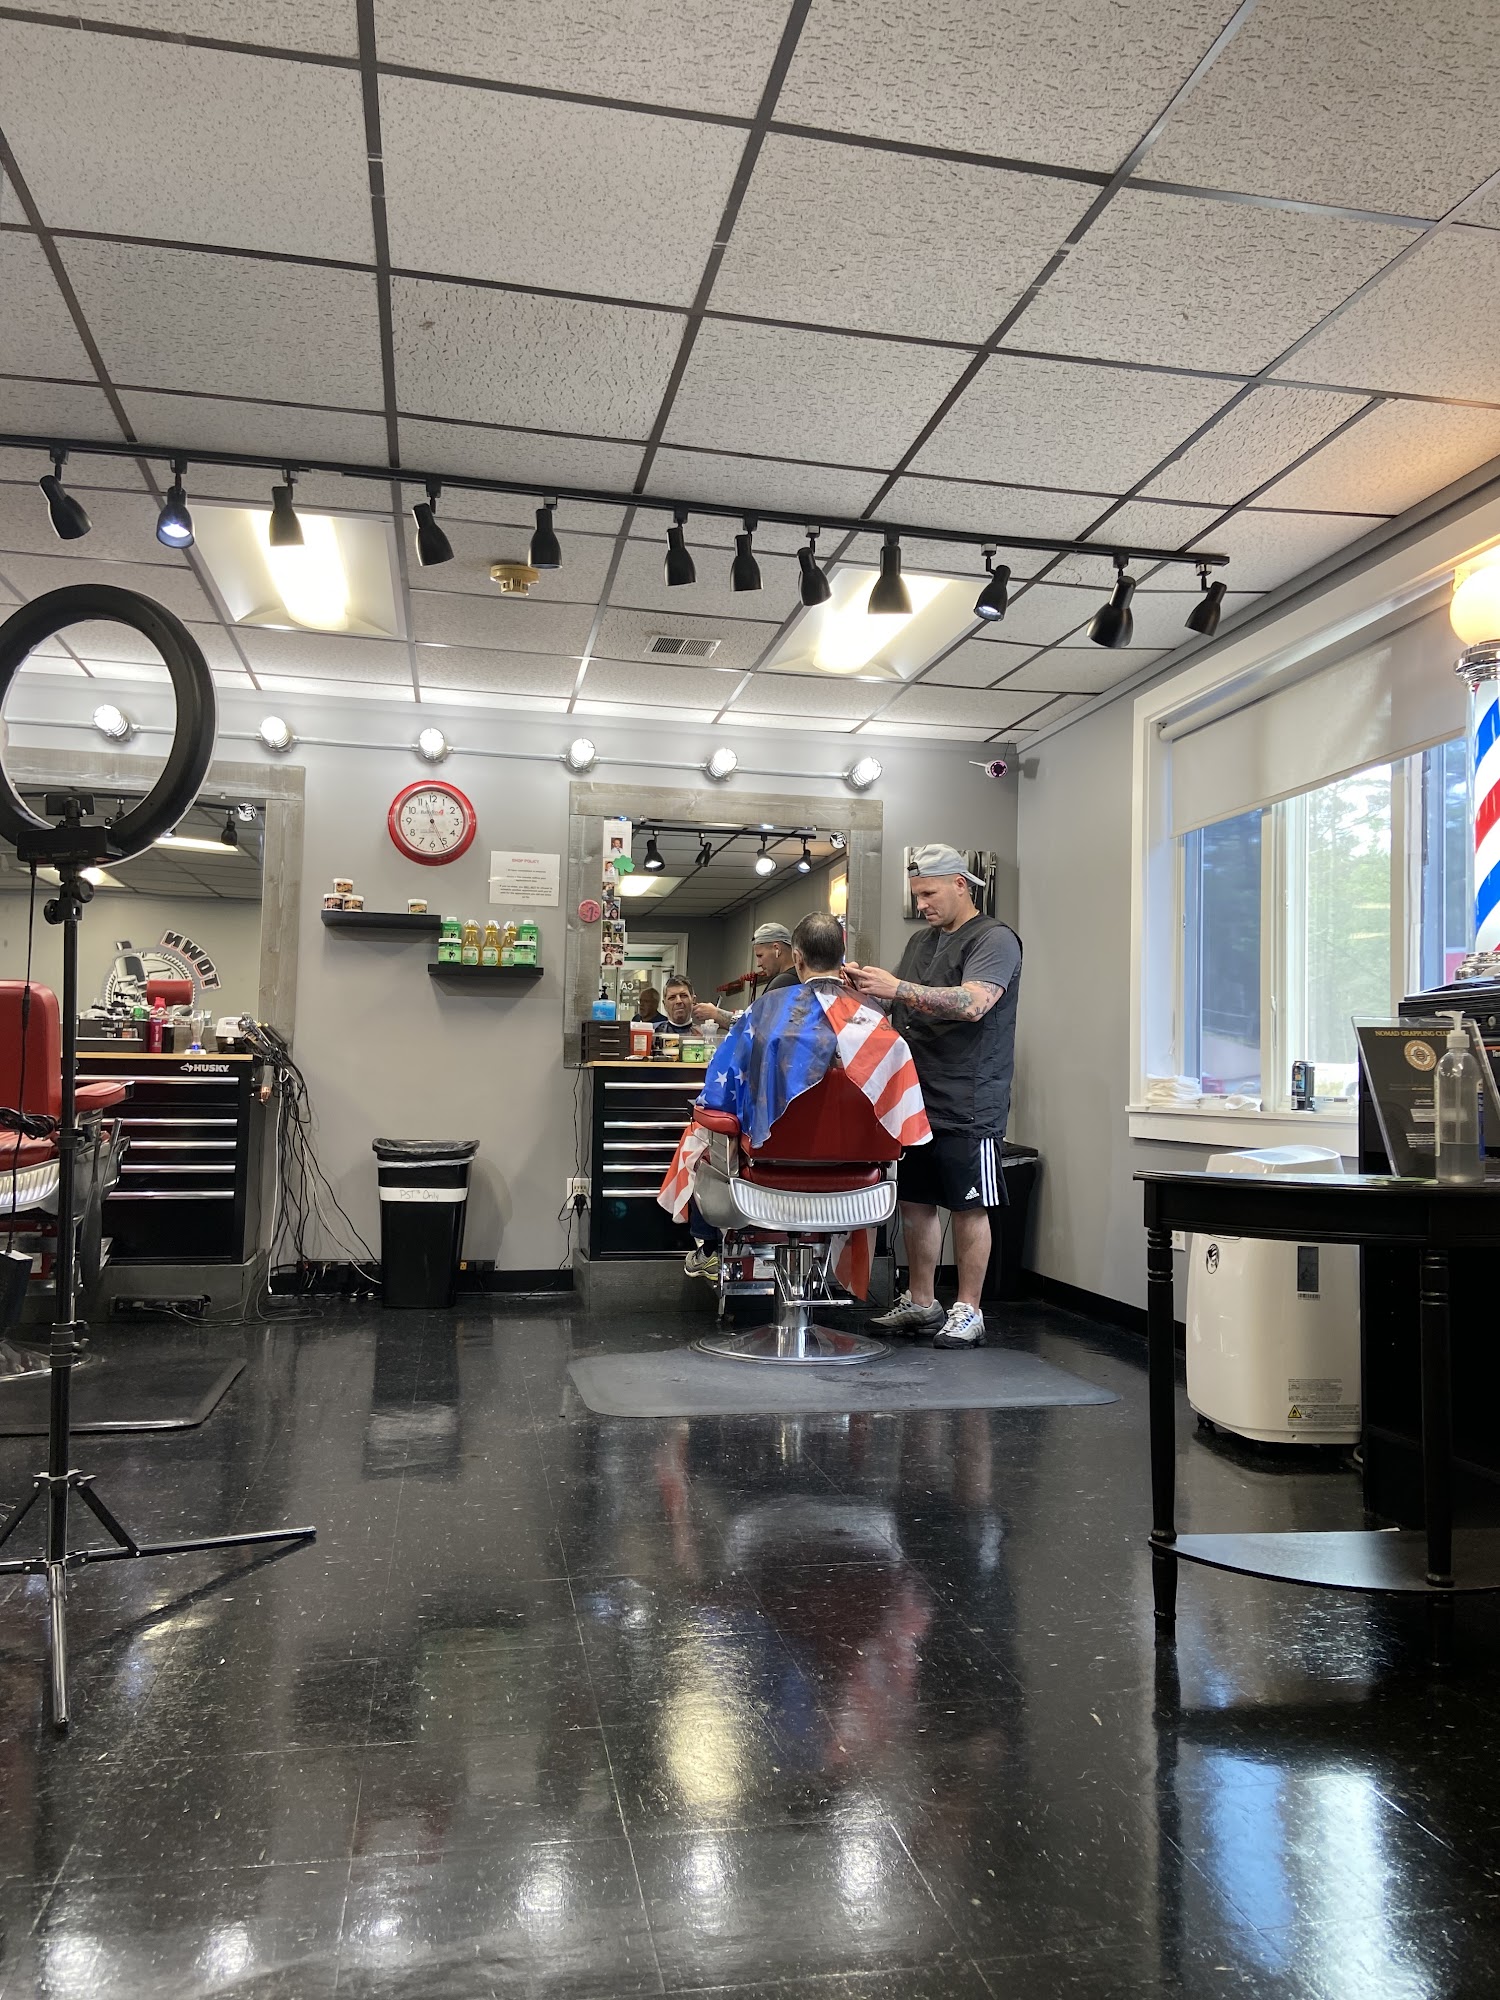 Town Barber Shop